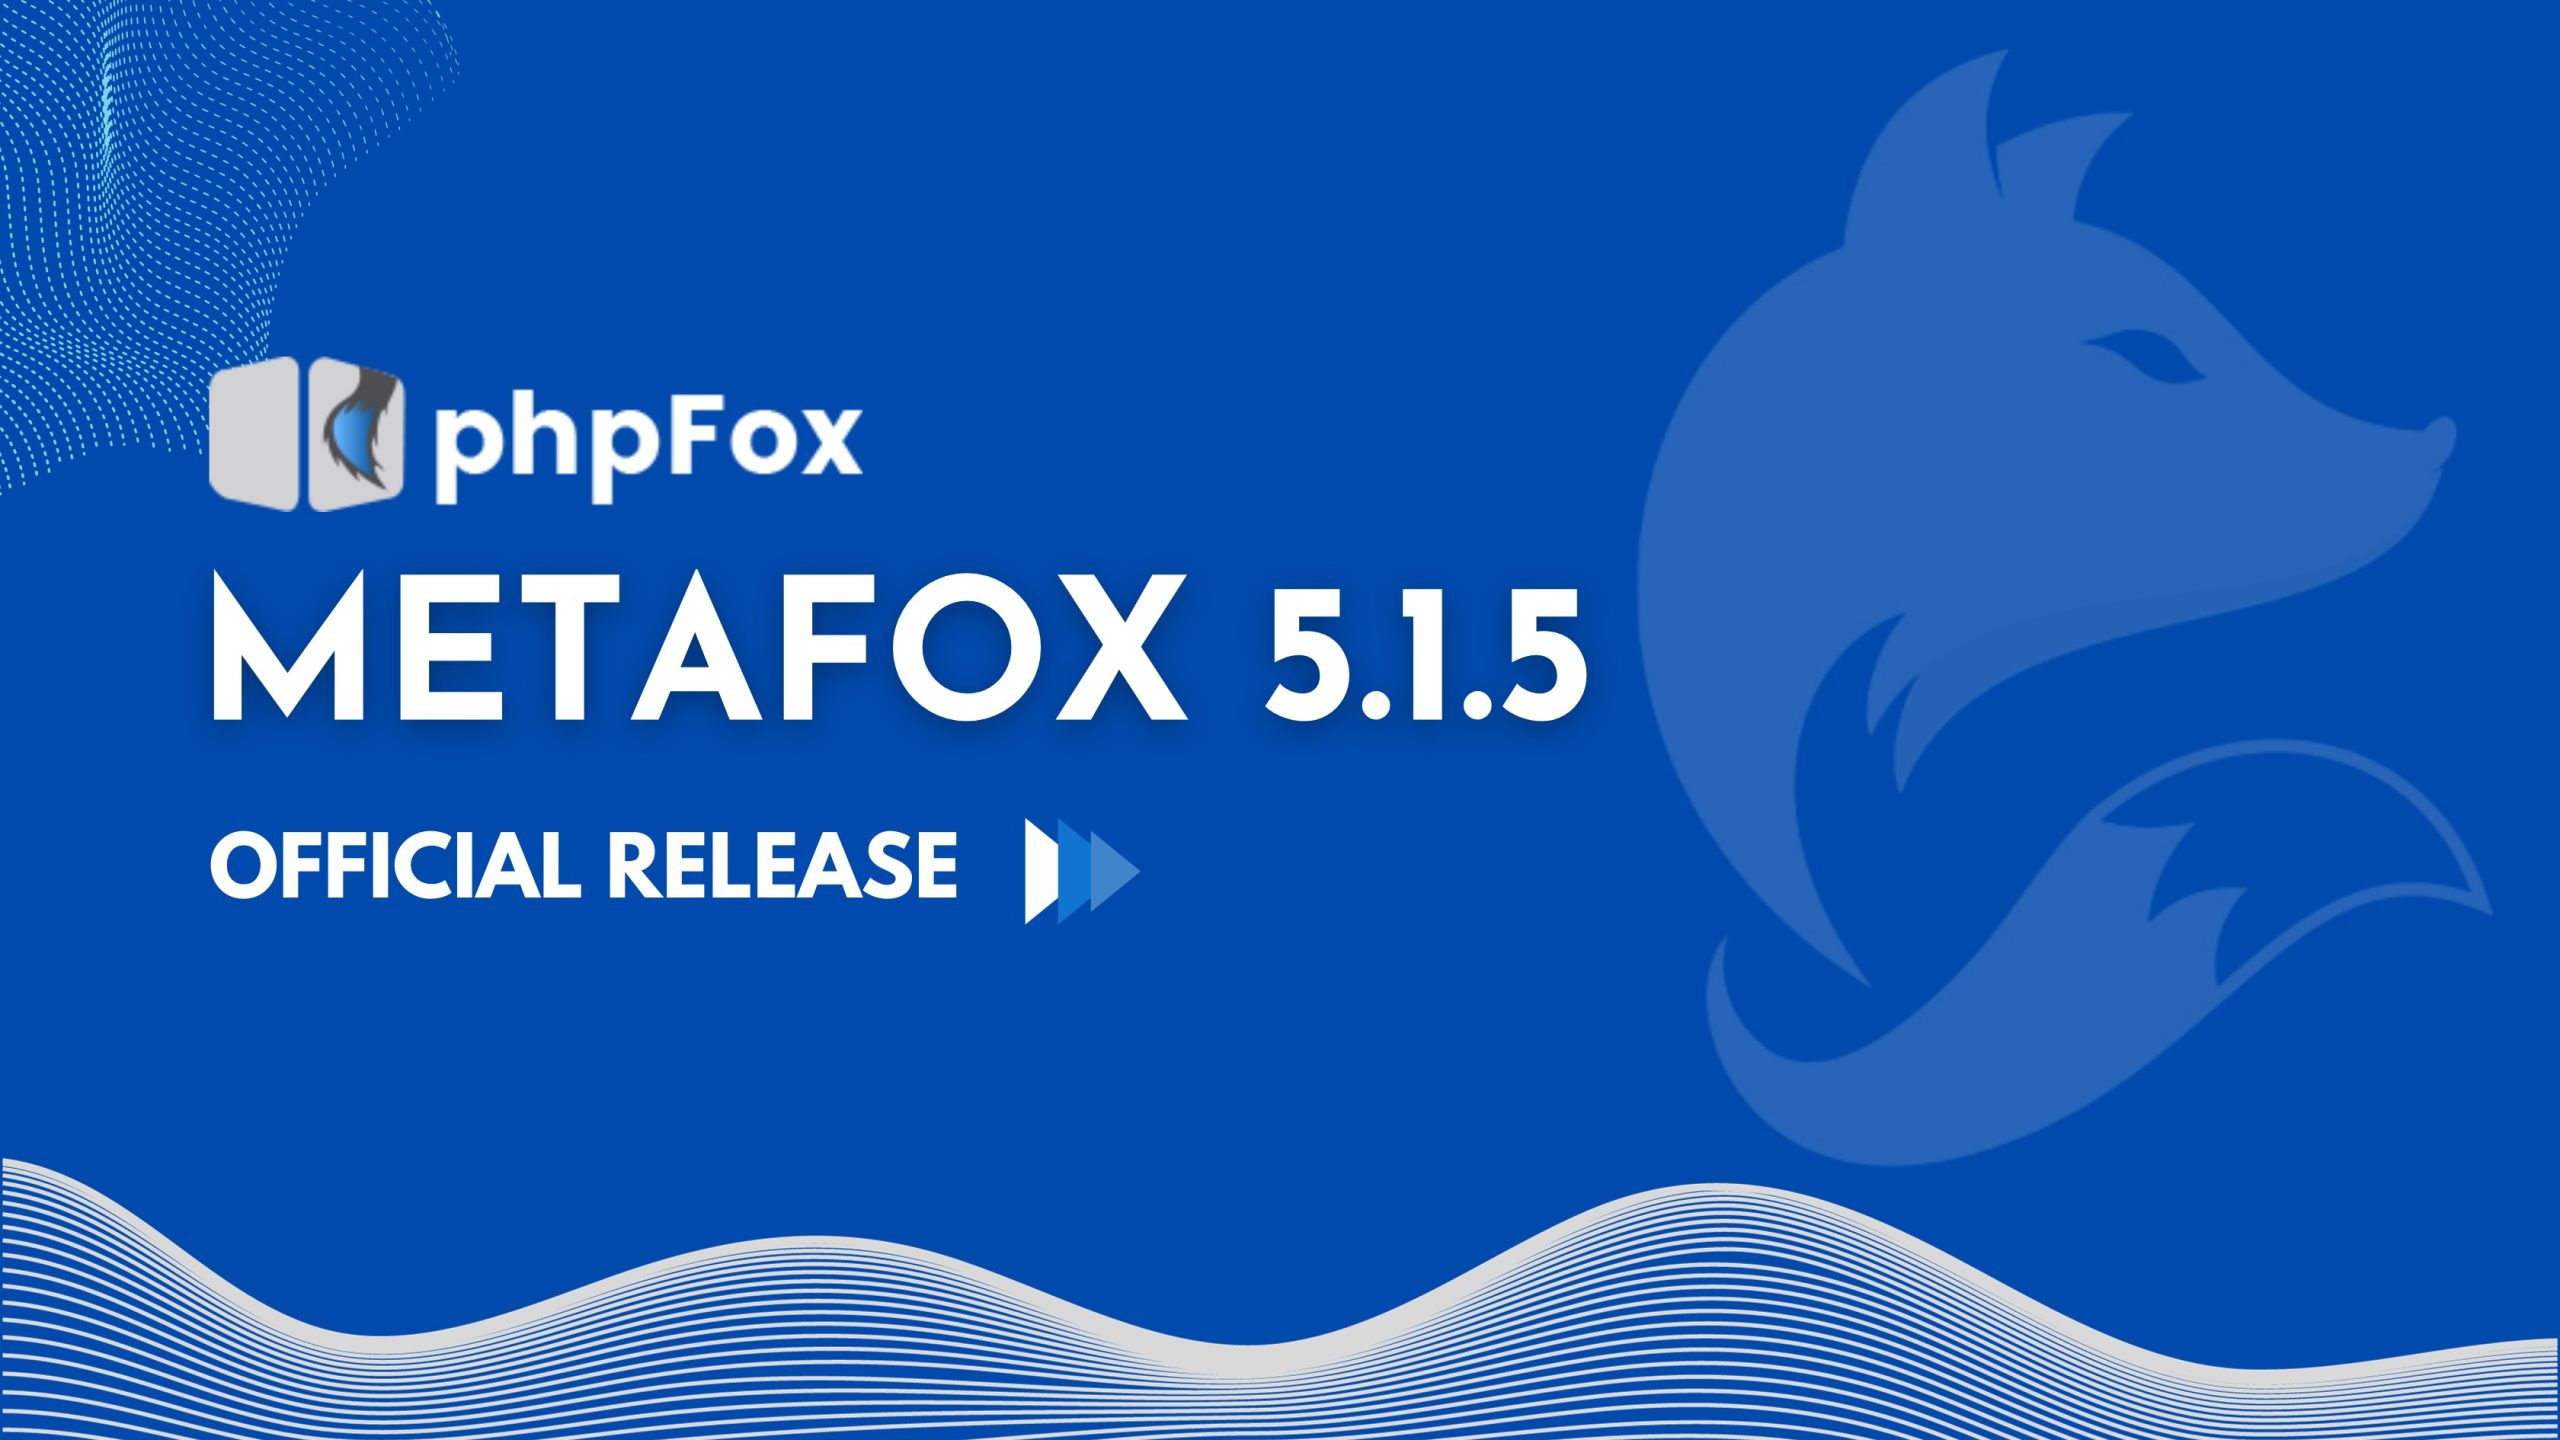 MetaFox 5.1.5 Official Release